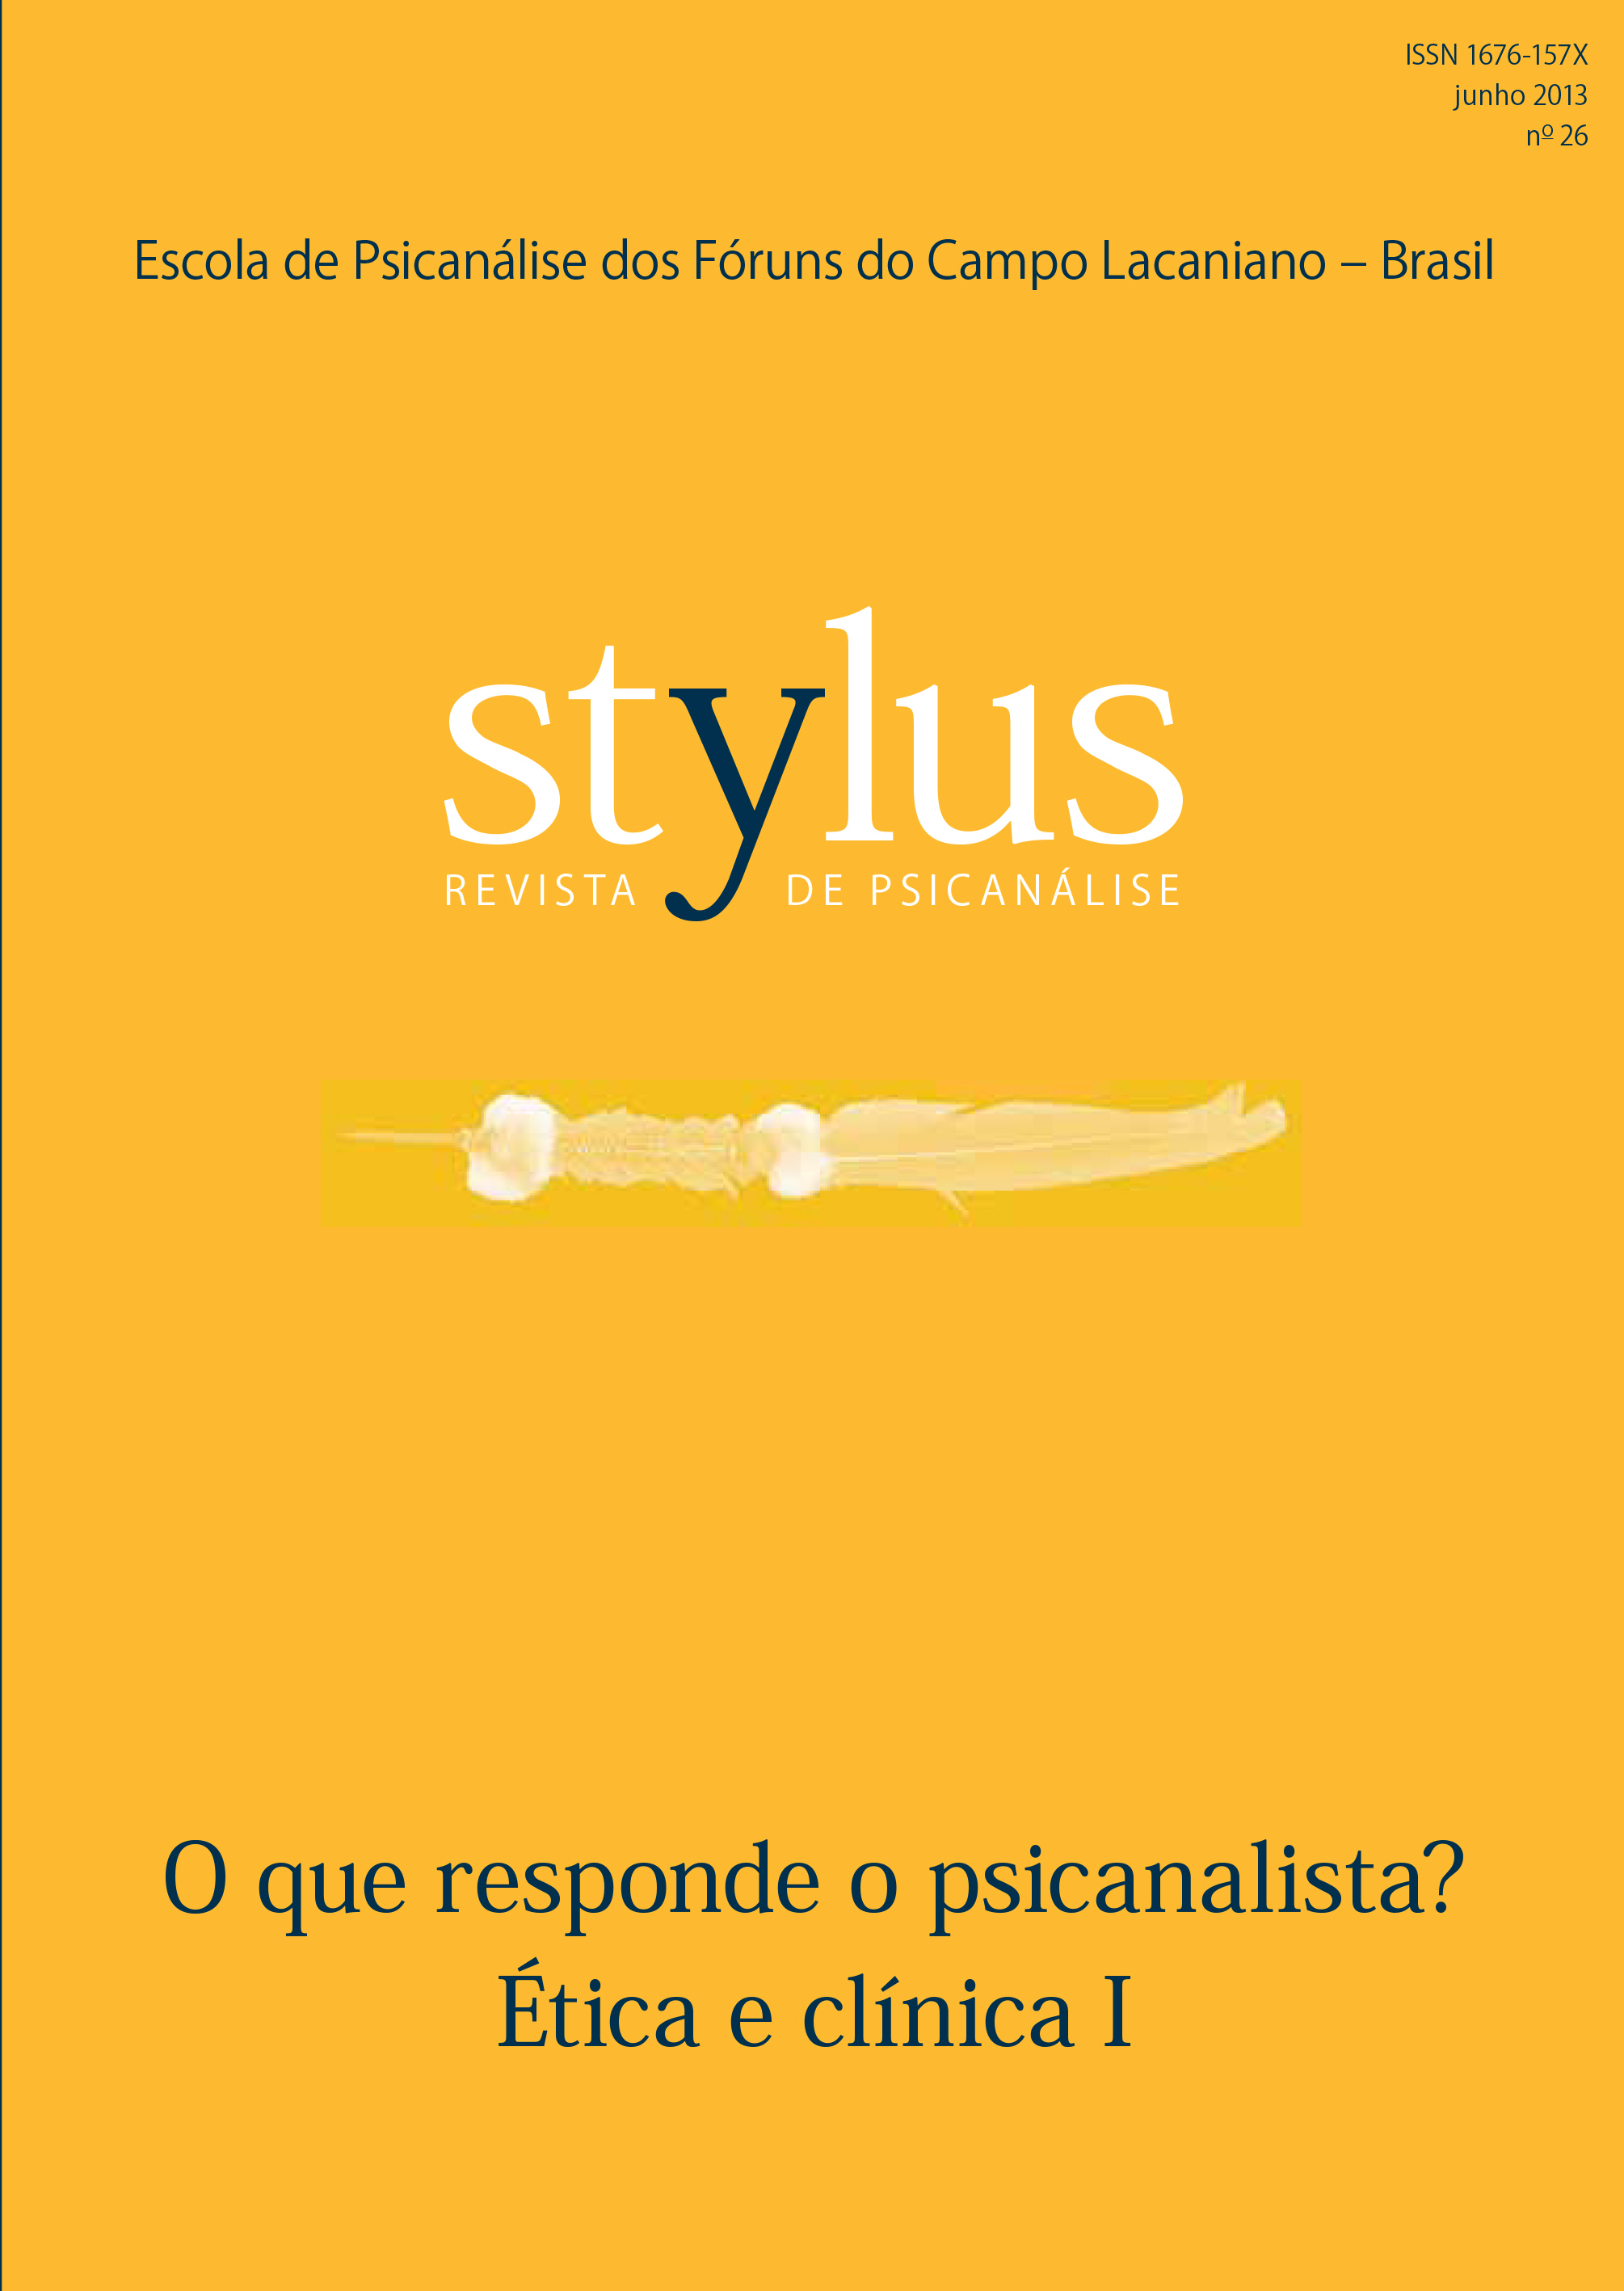 Stylus 32 by Escola de Psicanálise dos Fóruns do Campo Lacaniano